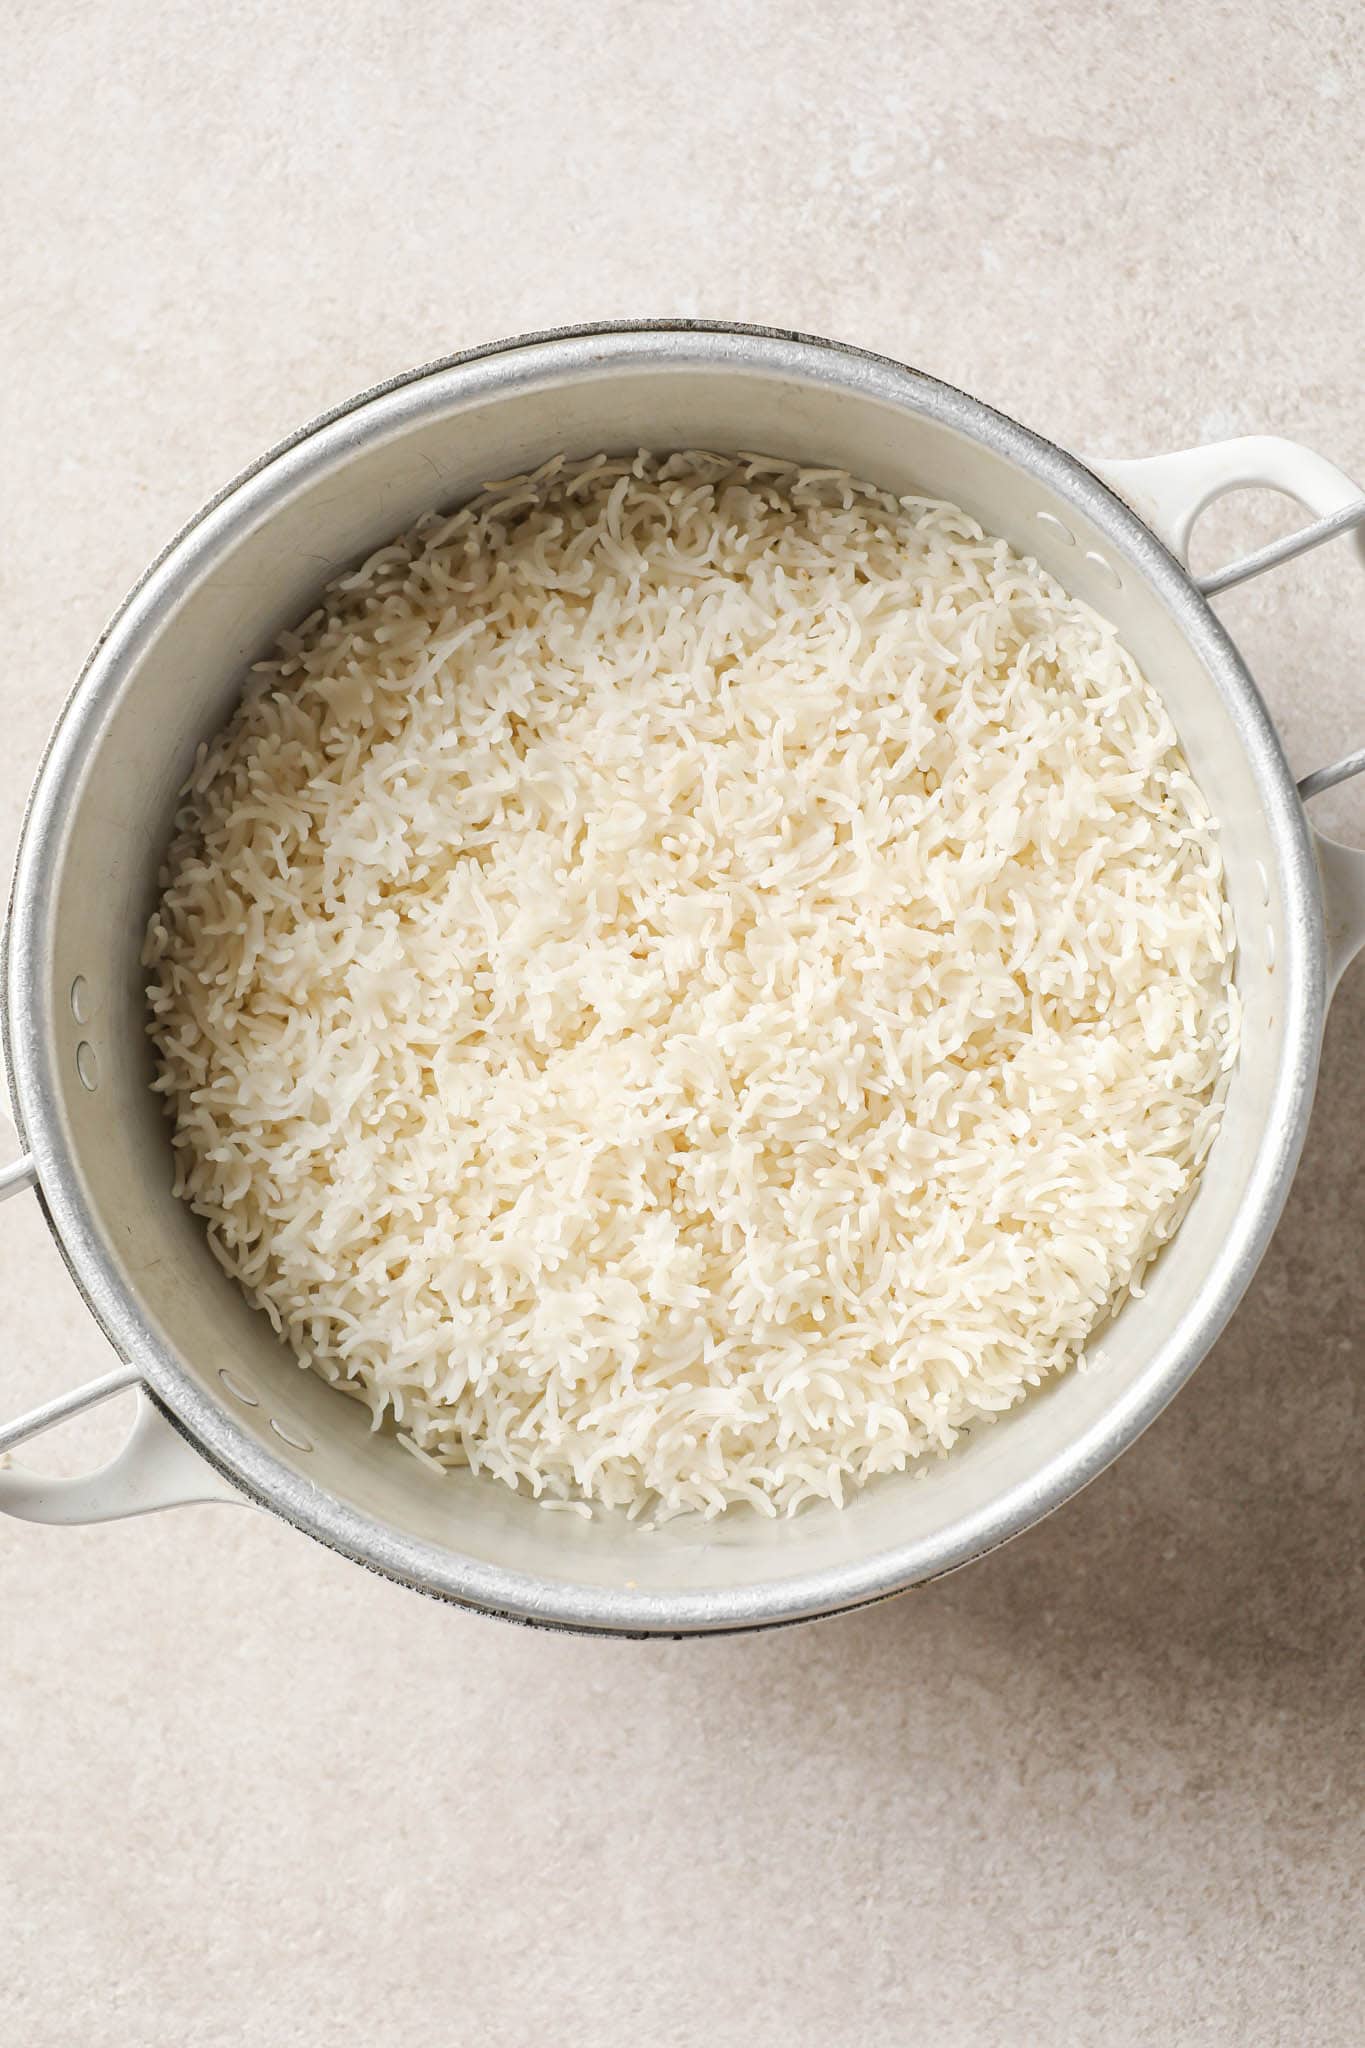 Parboiled basmati rice drained